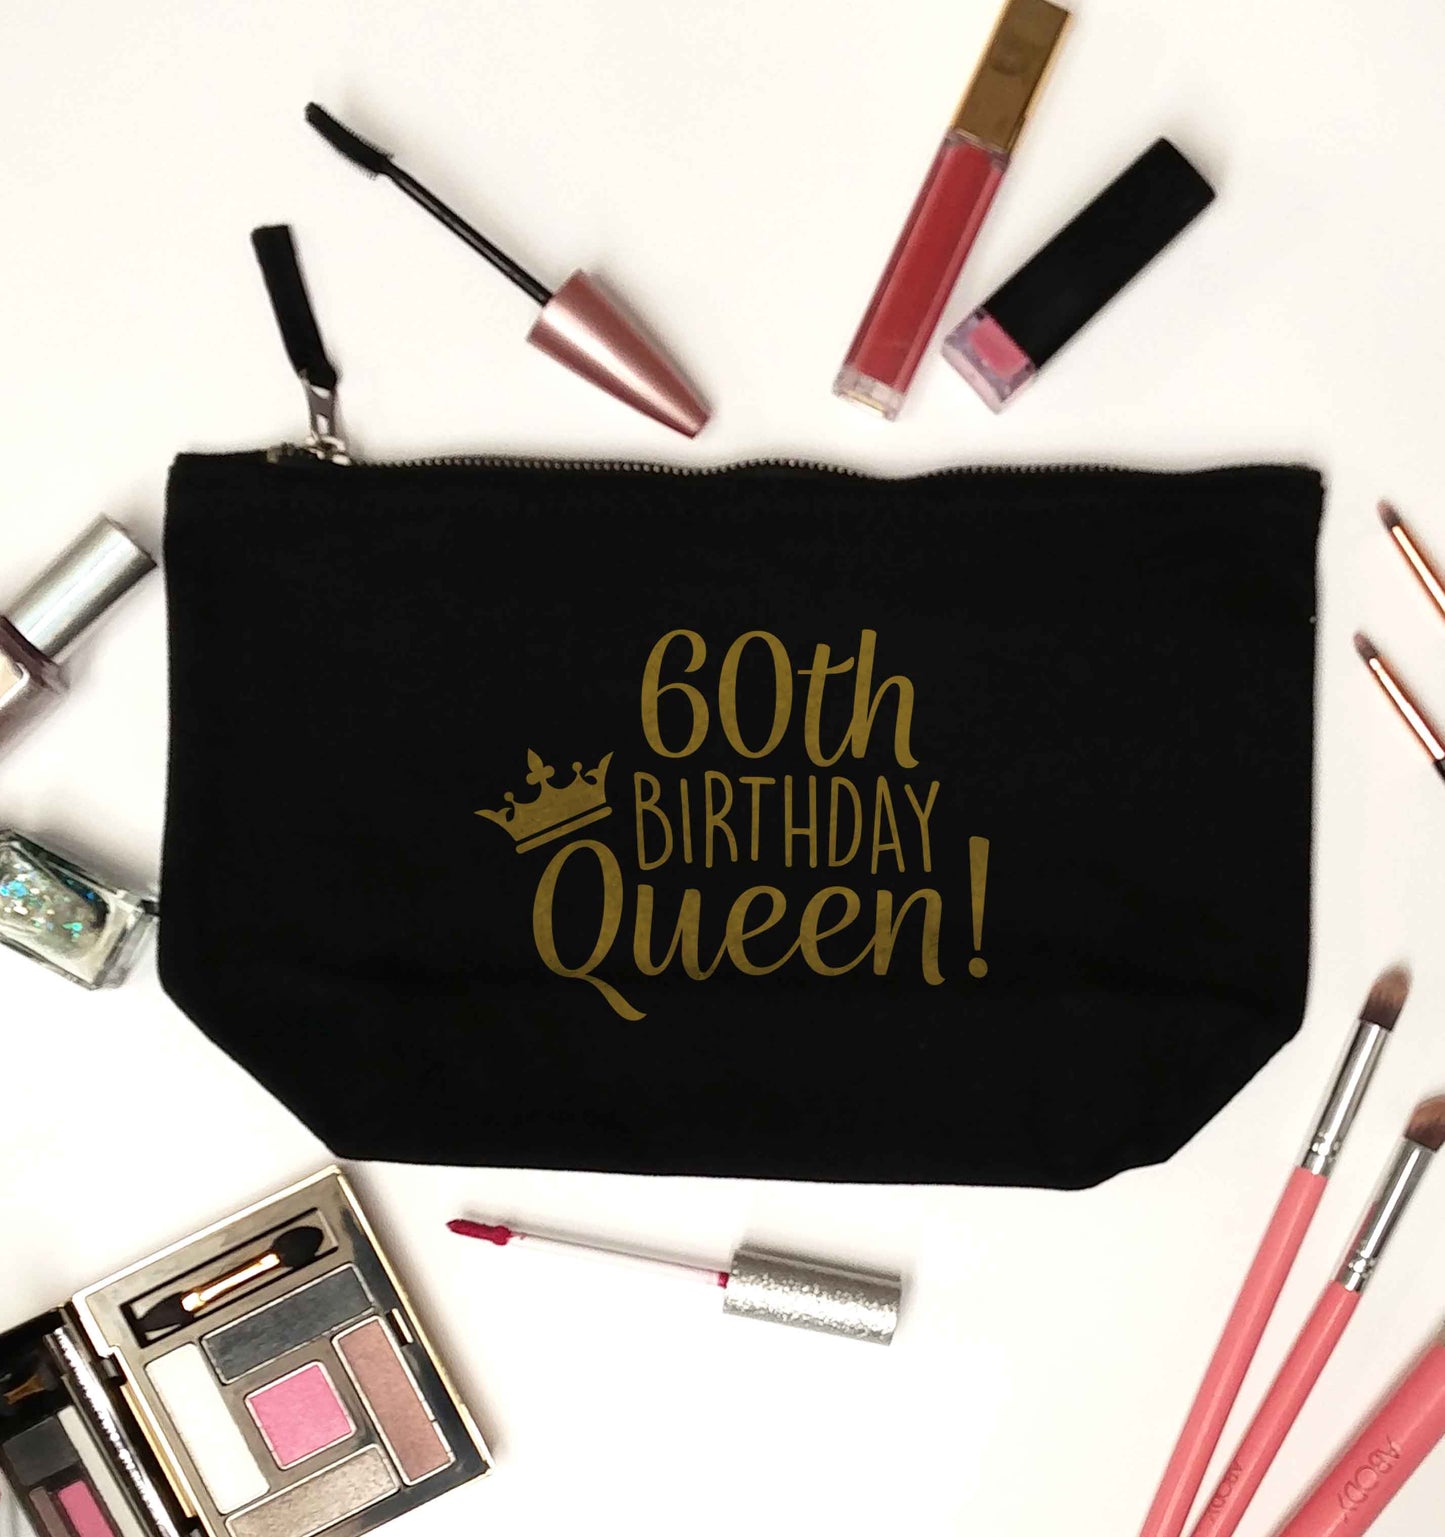 60th birthday Queen black makeup bag